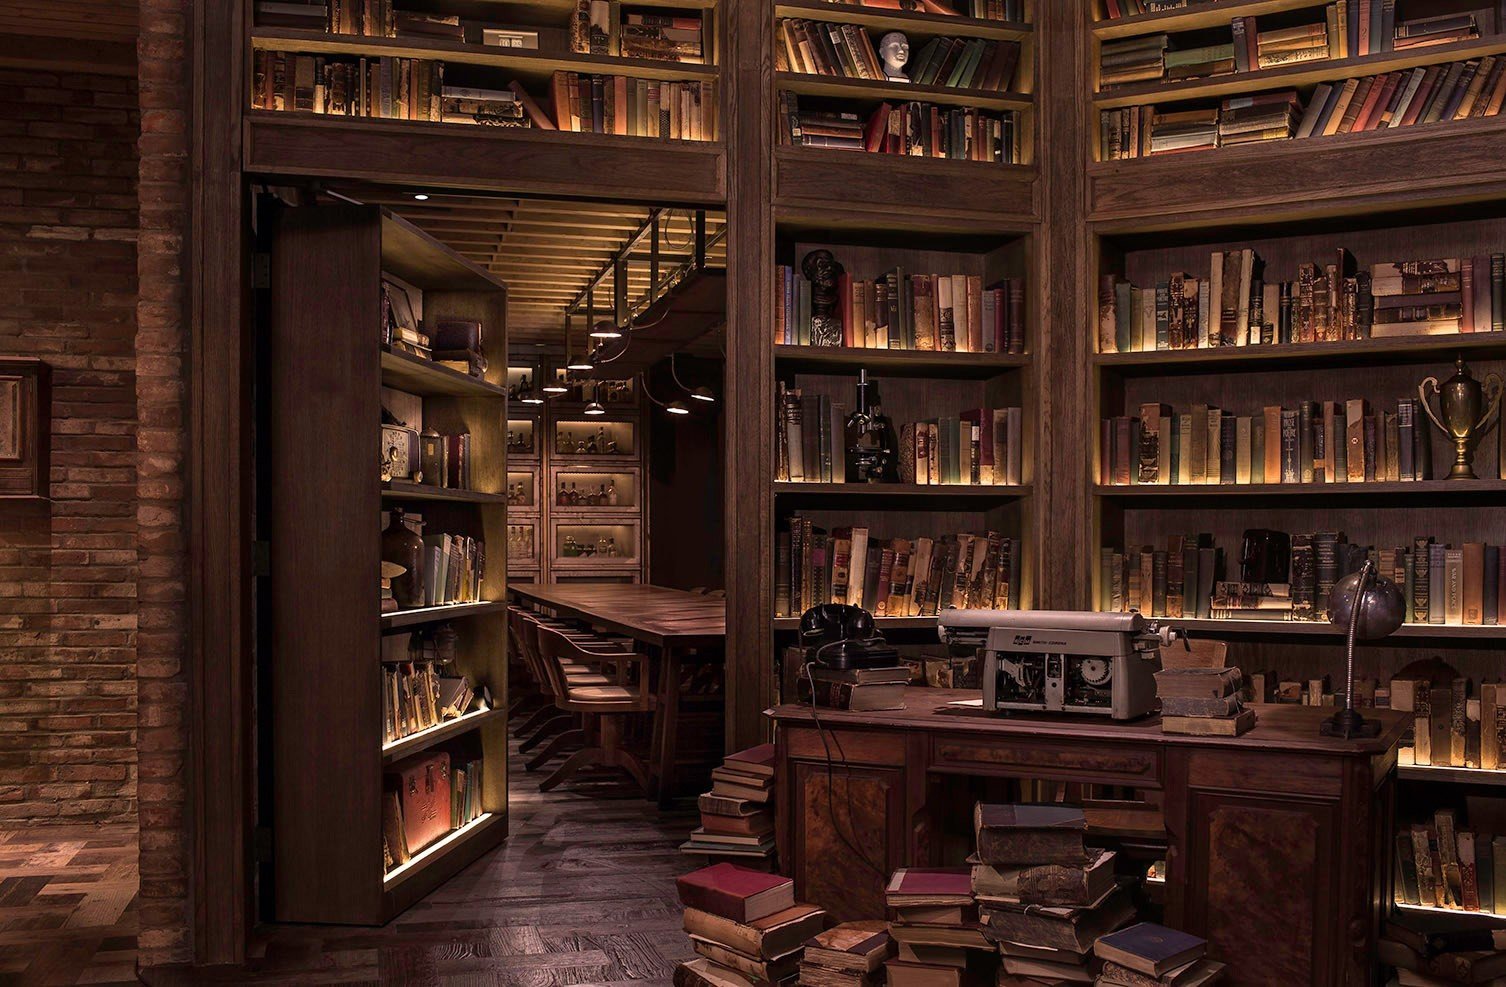 Темная комната книга. Библиотека штата Айова, США. Комната с книжными полками. Интерьер с книжными полками.